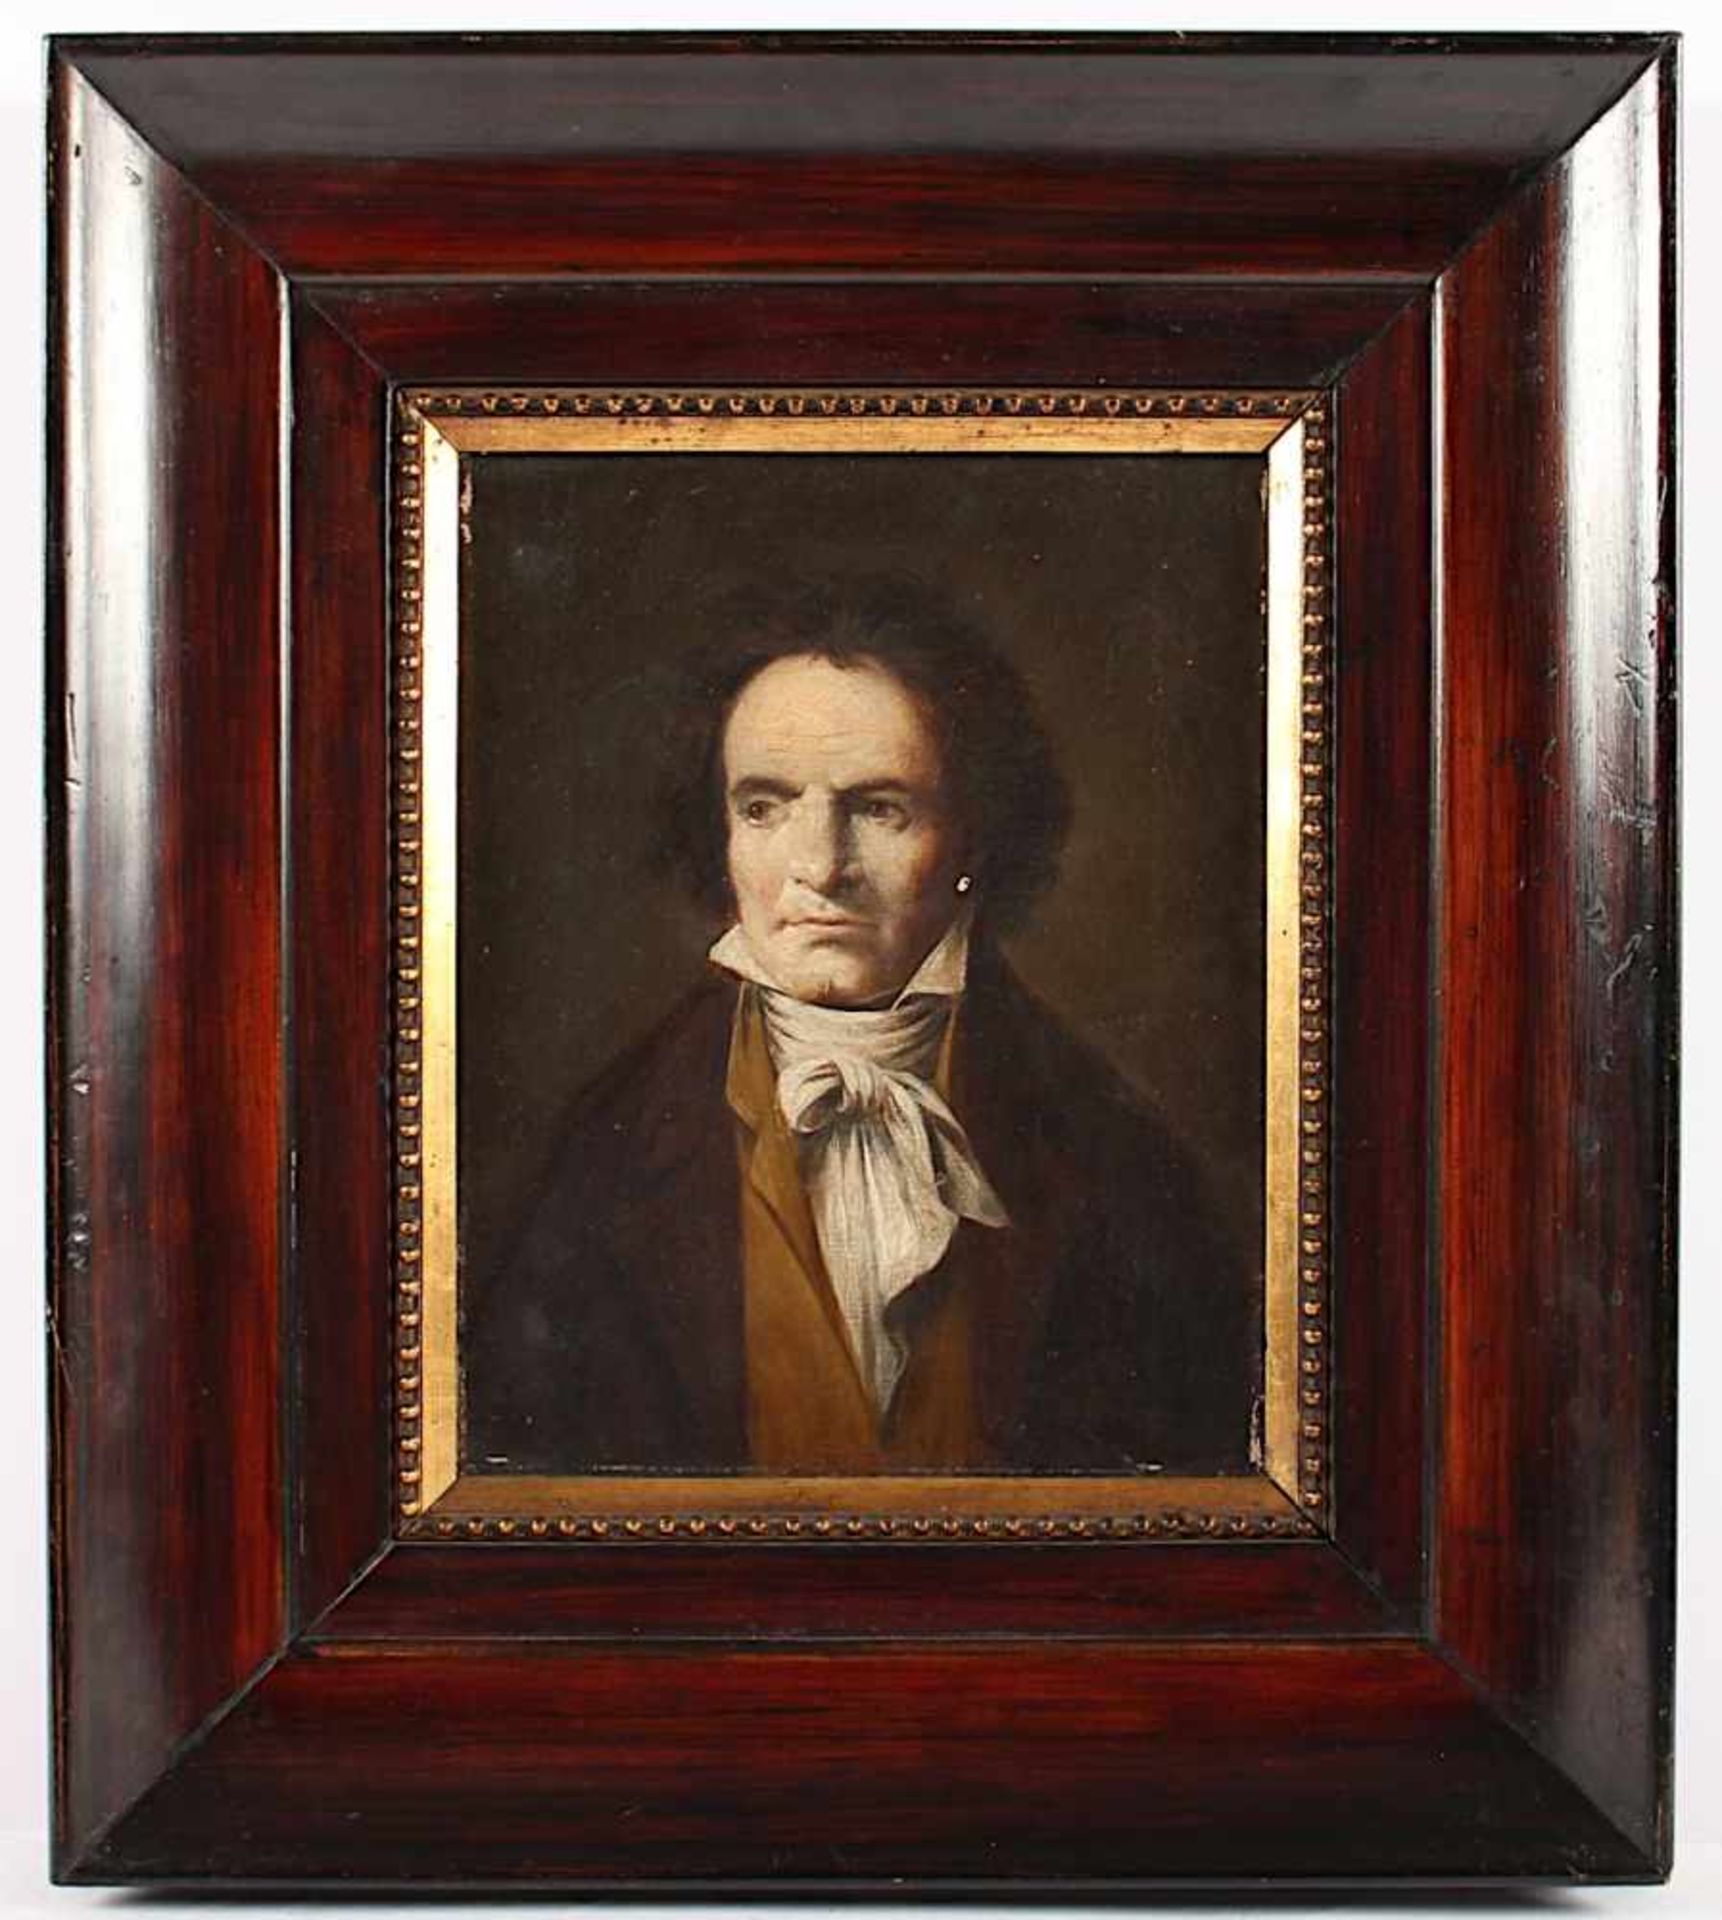 PORTRAITMALER A.20.JH., "Bildnis des Ludwig van Beethoven", Öl/Lwd., 27 x 22, besch., R.